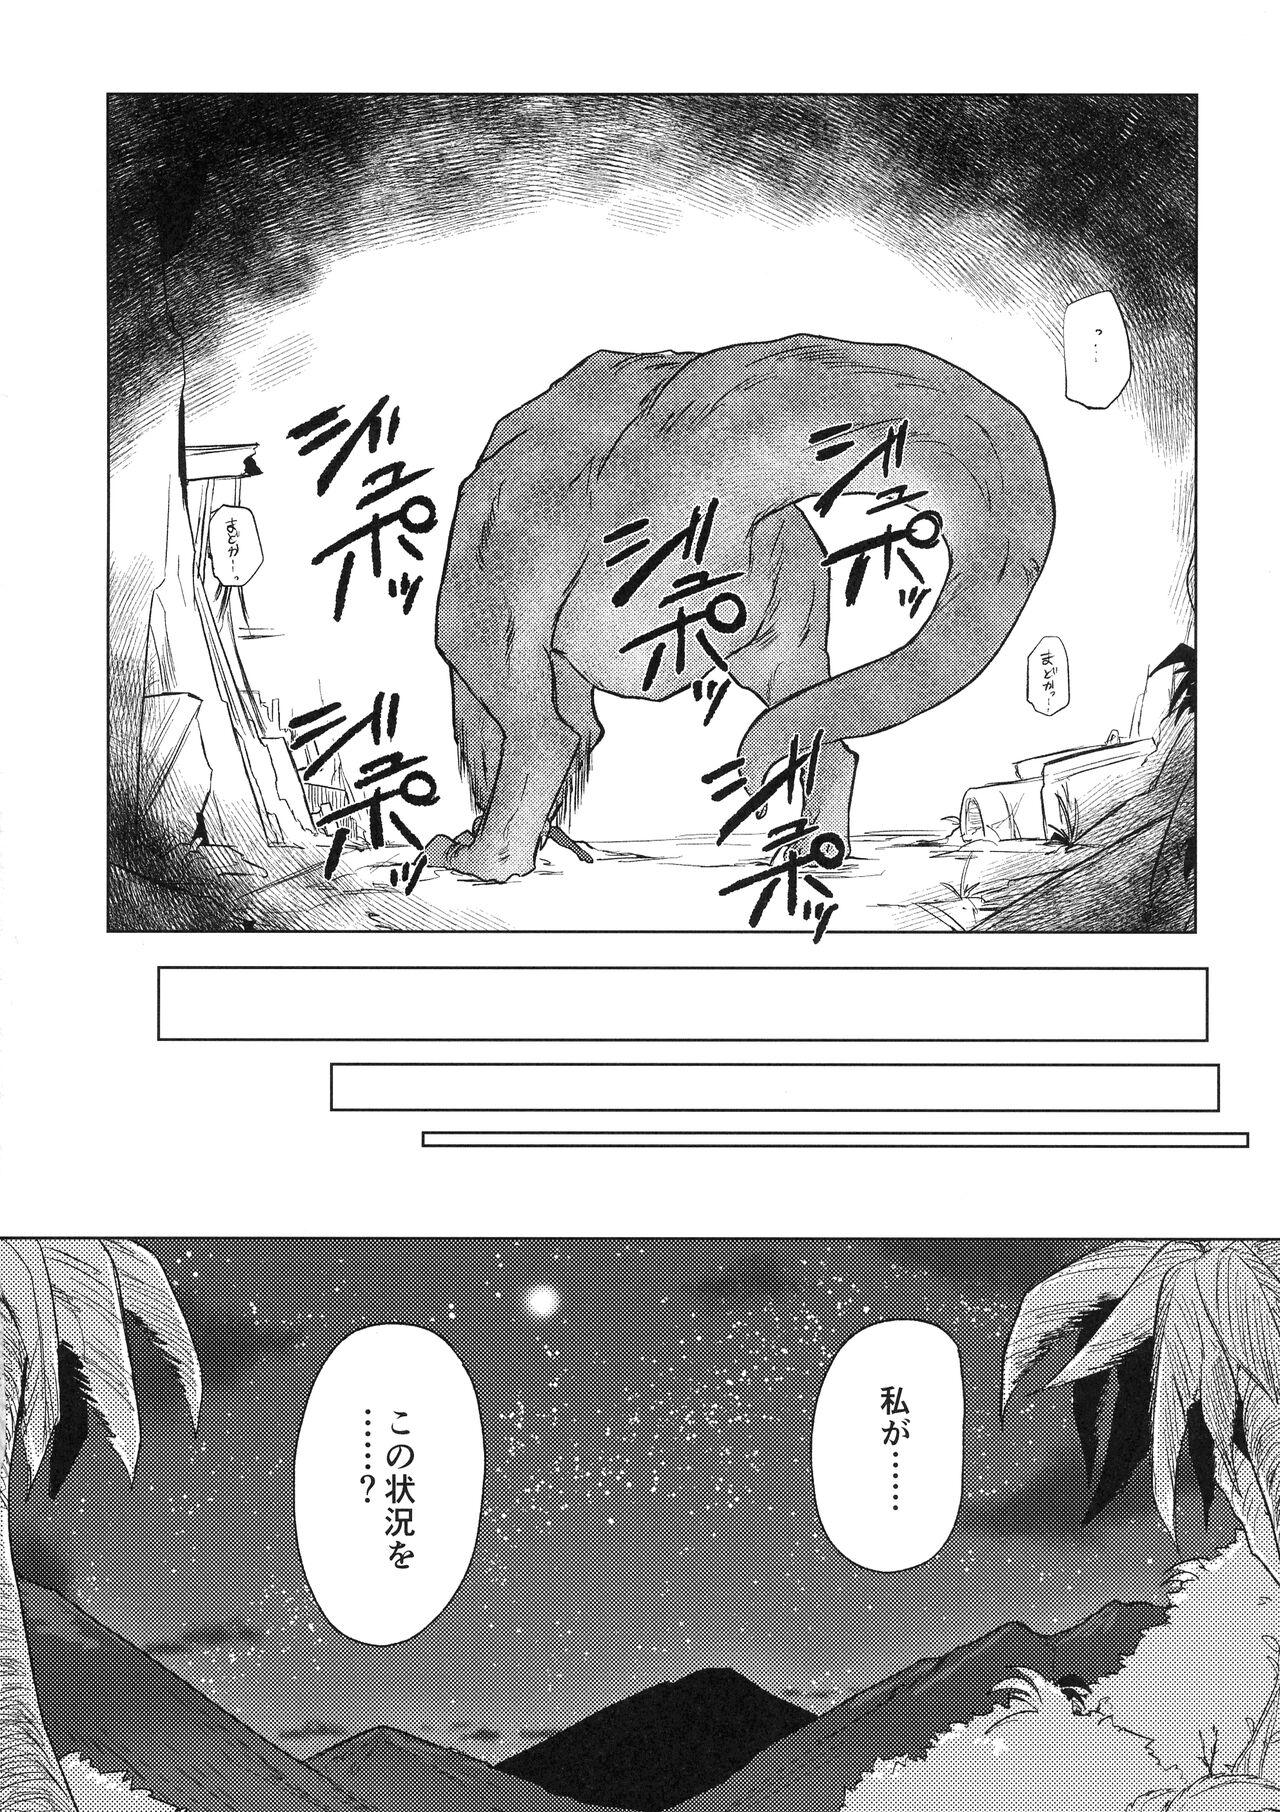 Stepbro Fellatiosaurus VS Mahou Shoujo Kouhen - Puella magi madoka magica Stretching - Page 4